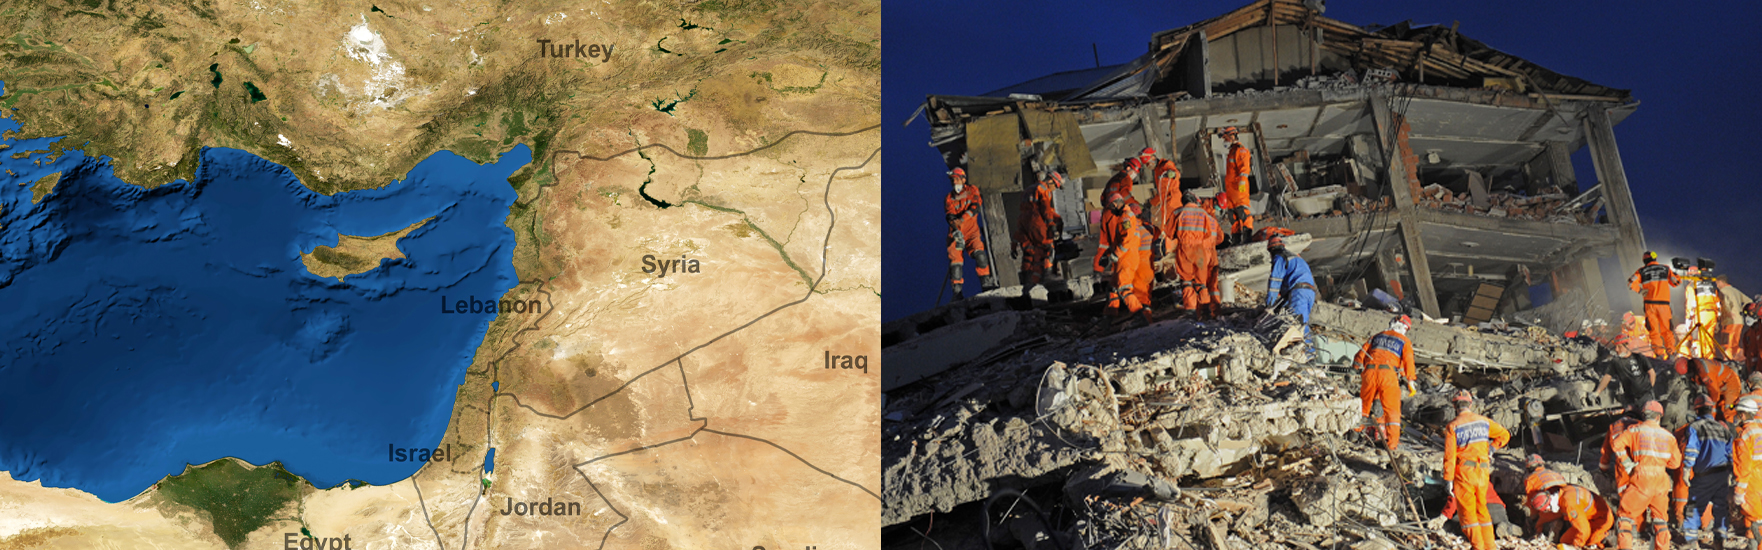 disaster-turkey-syria-earthquake-impactupdates-header-image